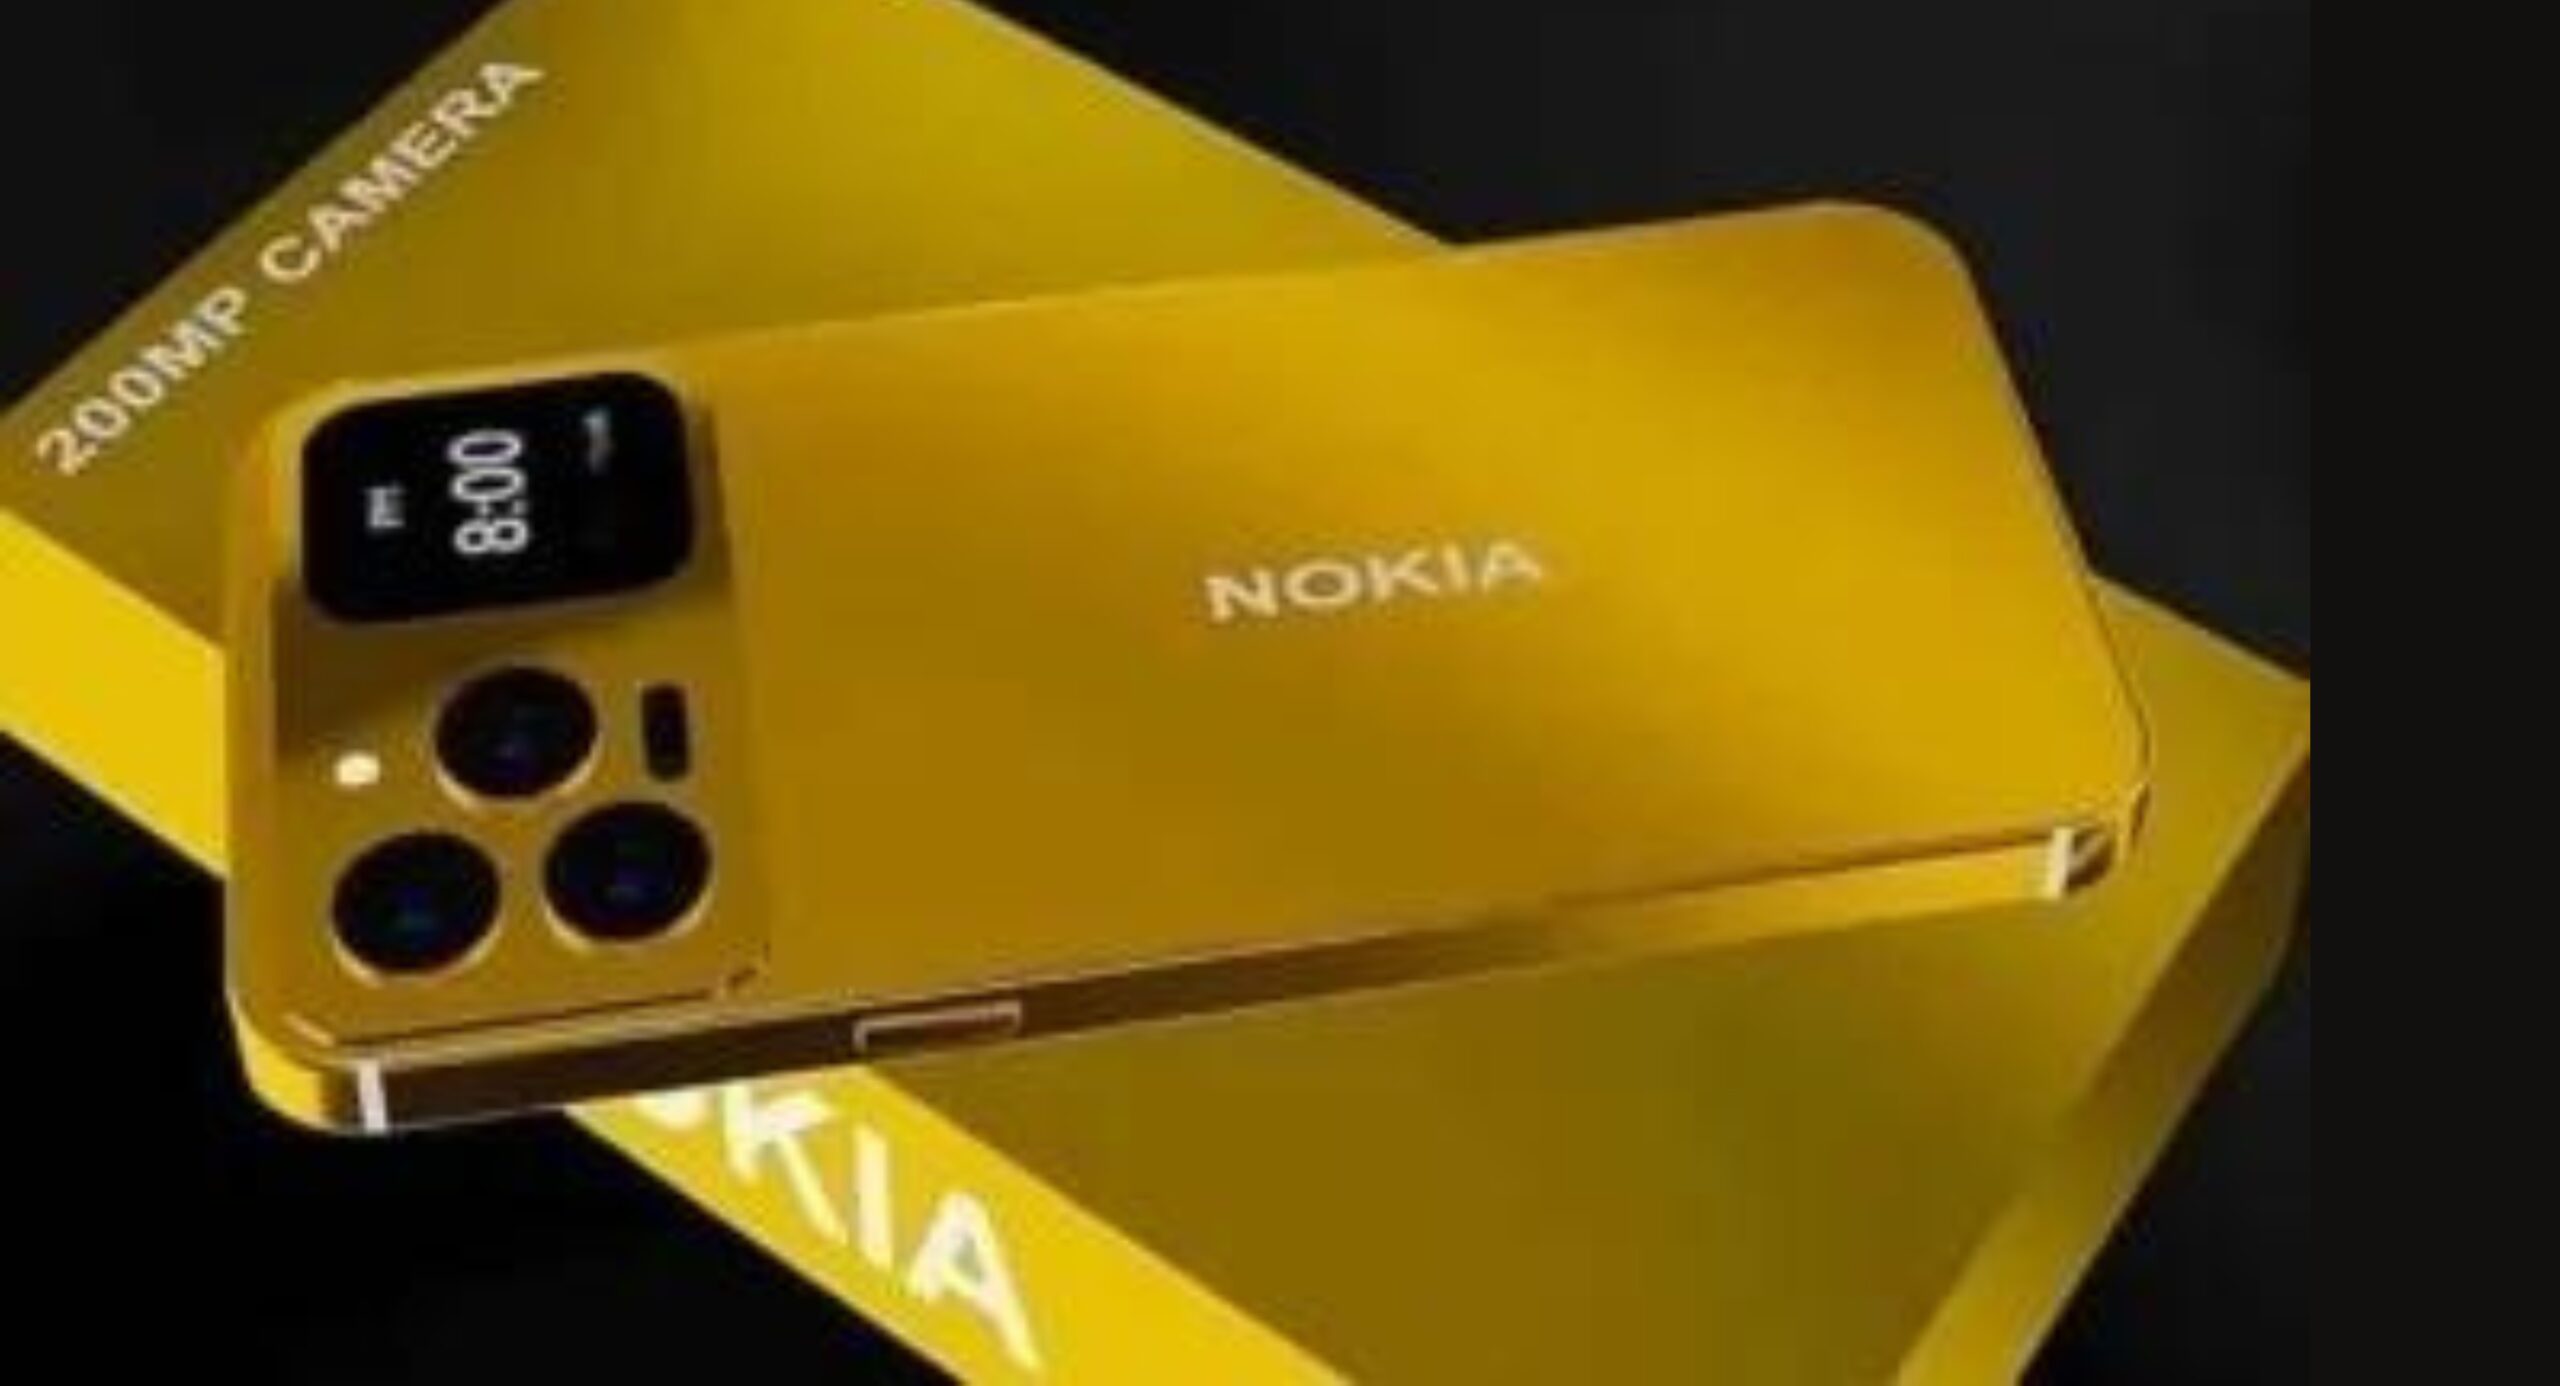 Nokia 6600 Max Smartphone Launch Soon